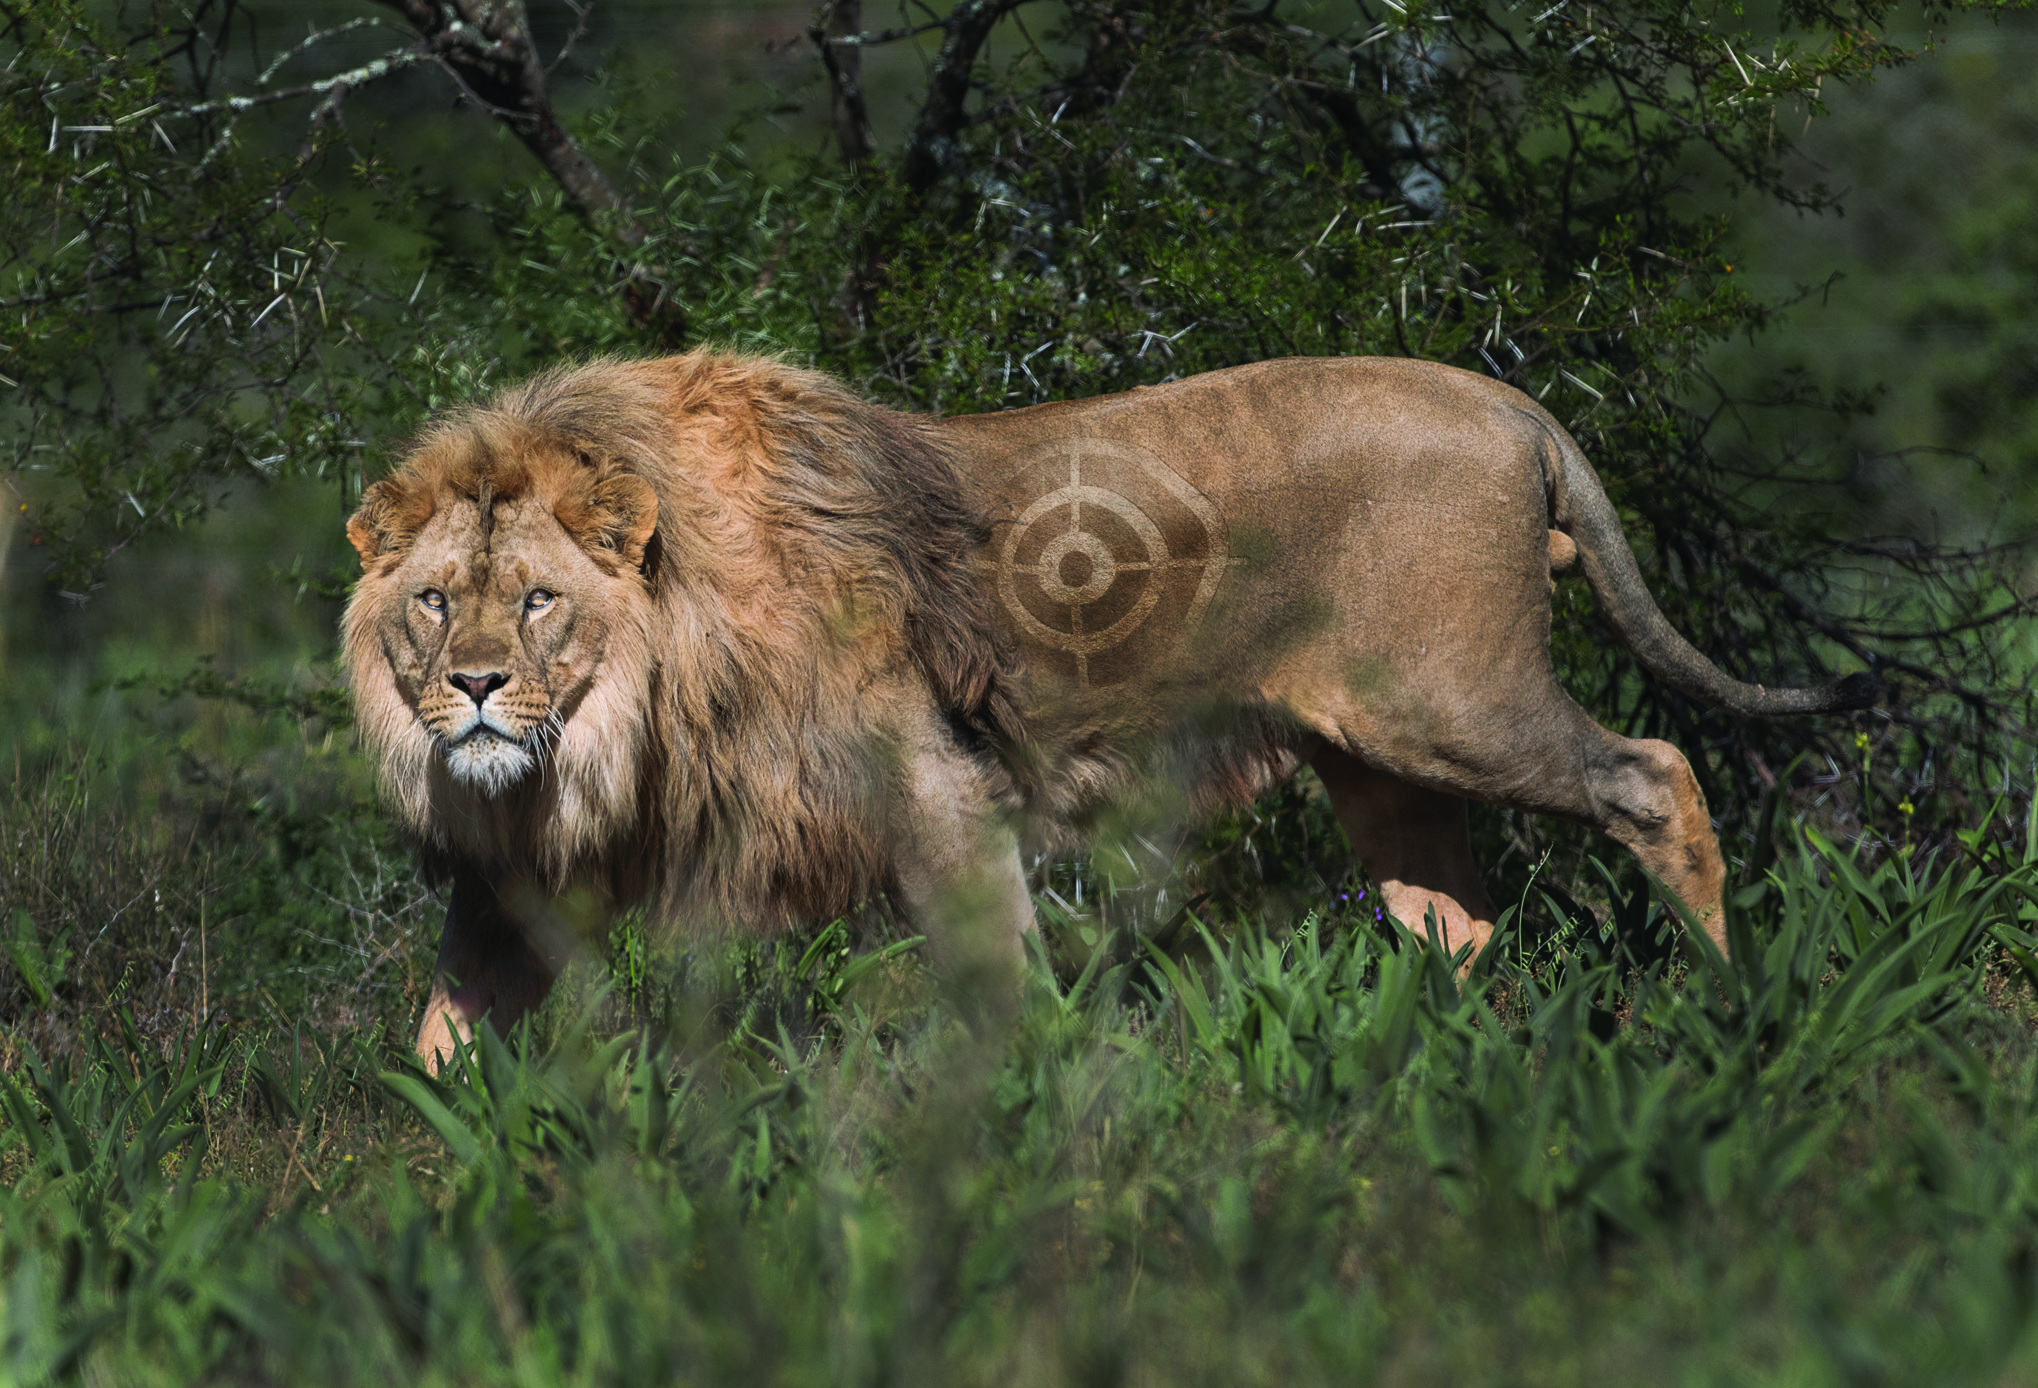 Lion Target